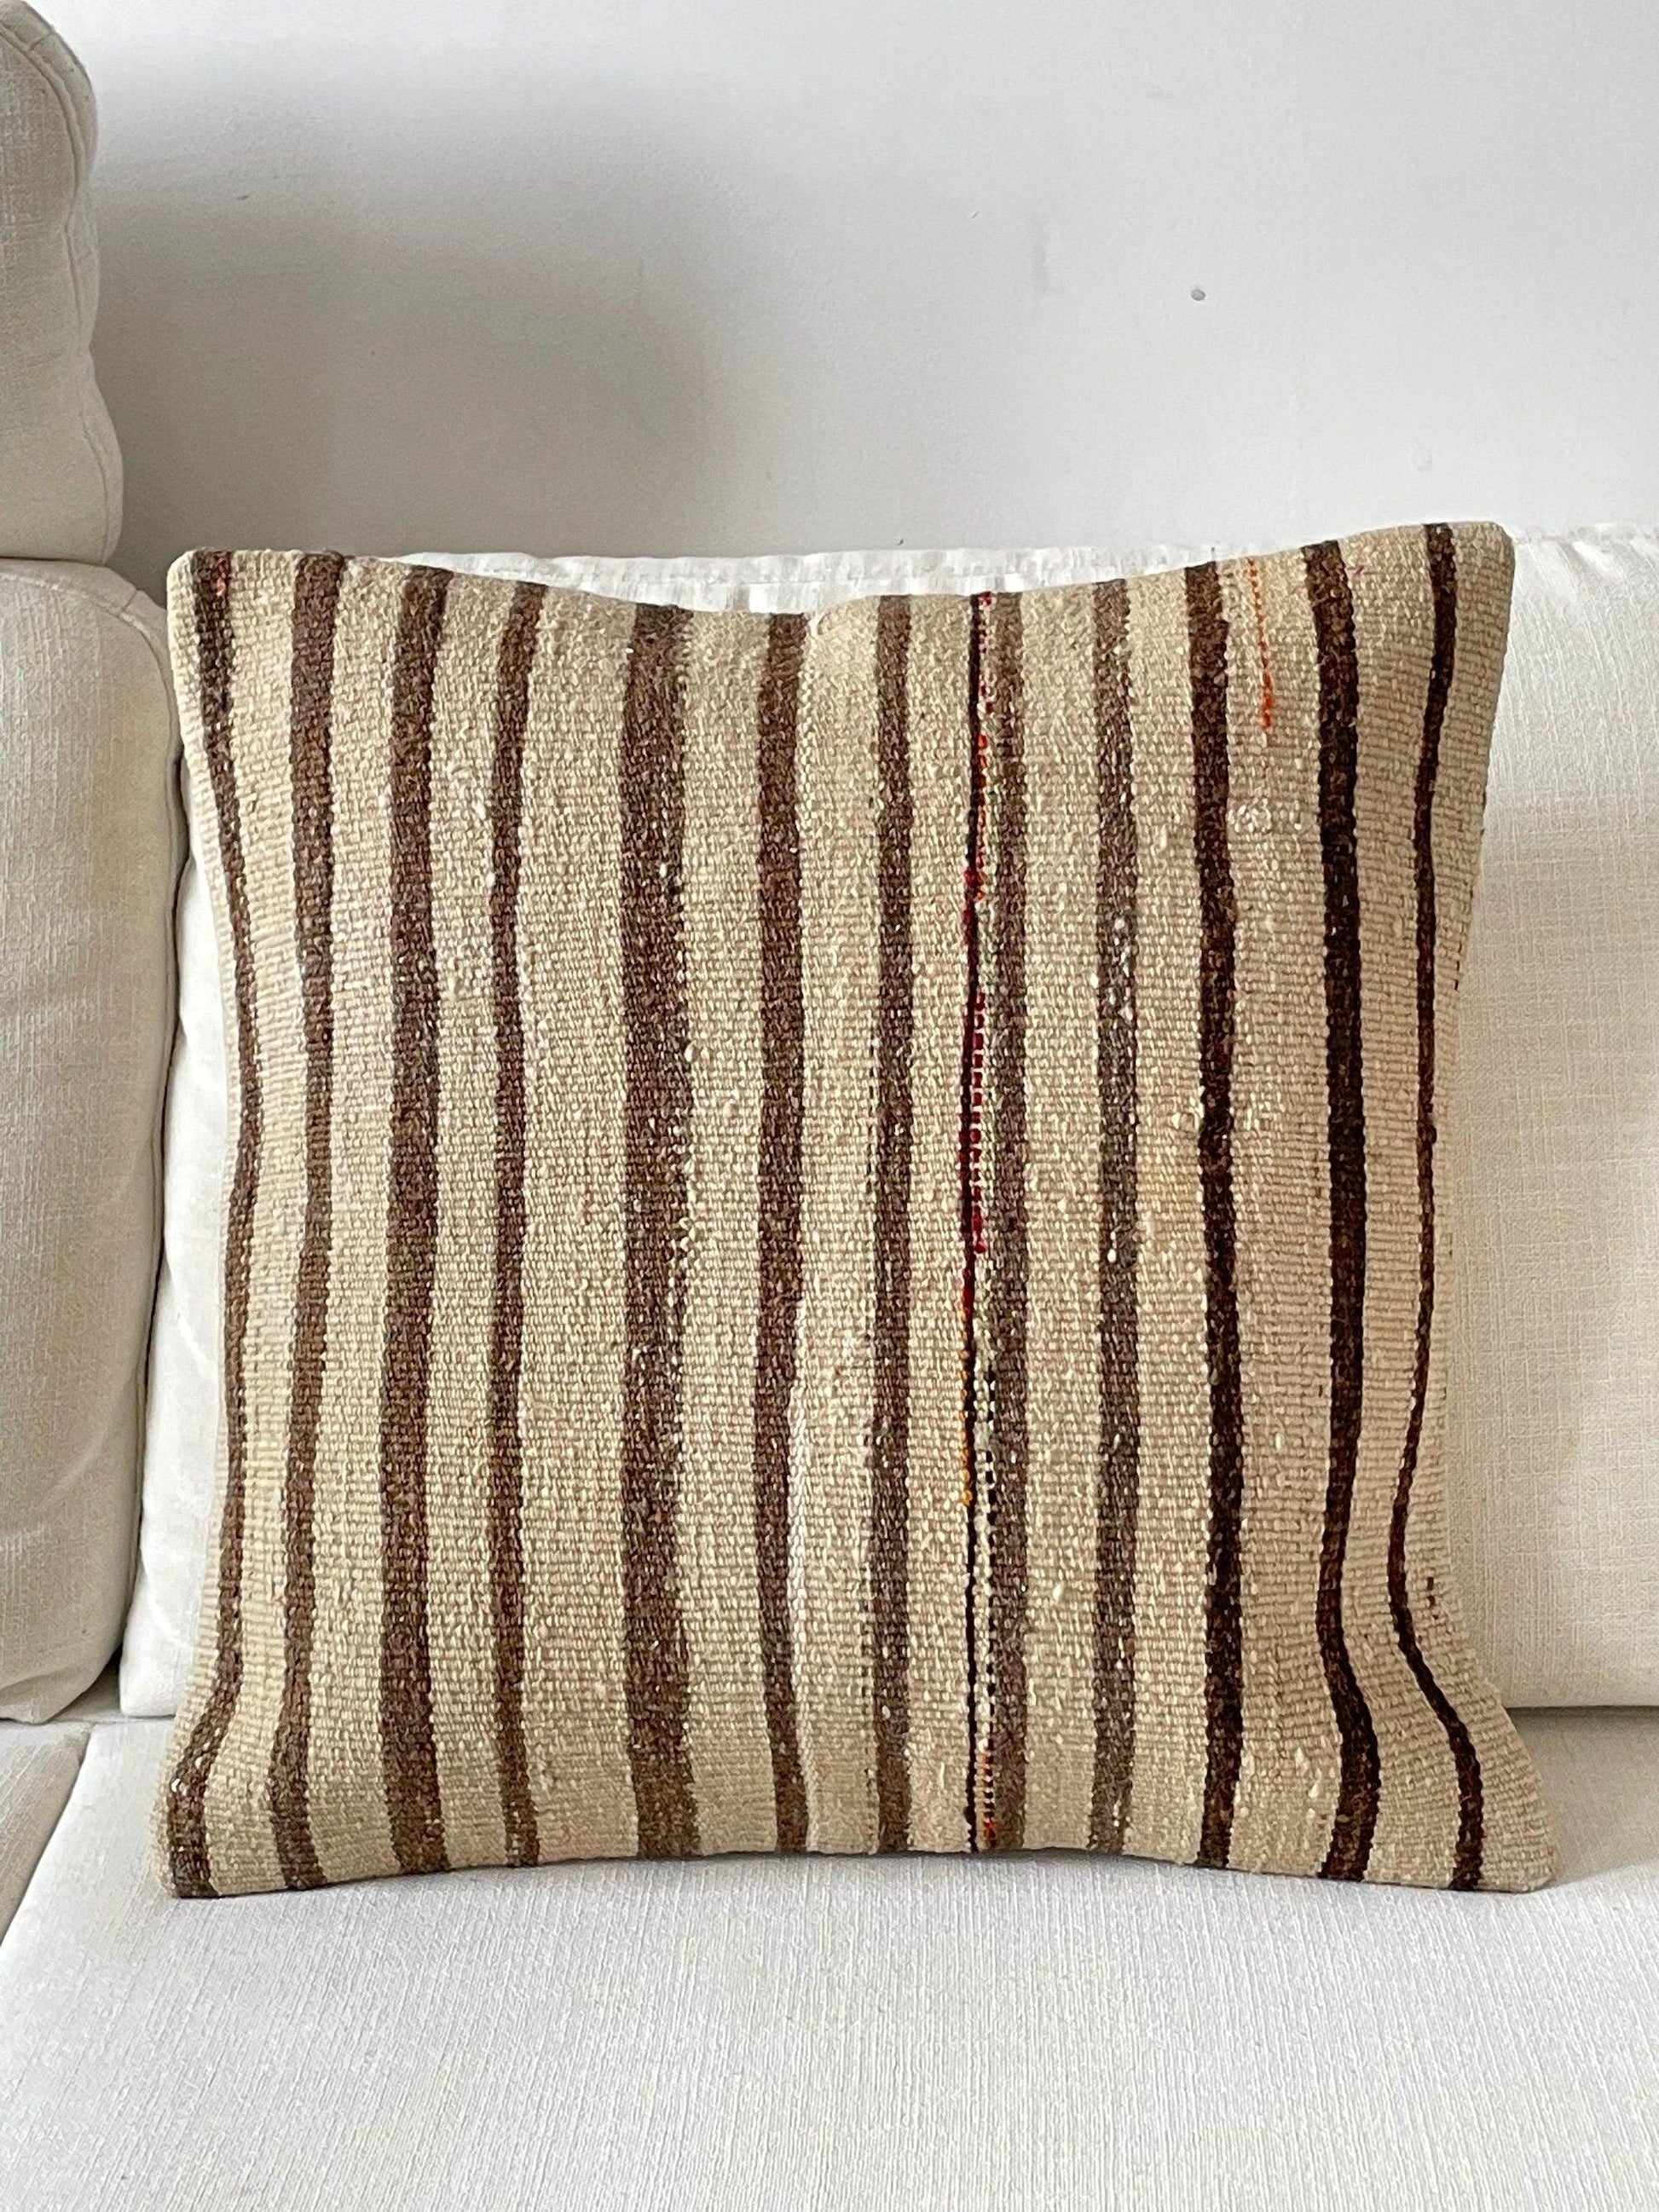 Hand-knotted Wool Original Vintage Kilim Cushion Cover 50x50cm (20x20') - BeachPerfect.de